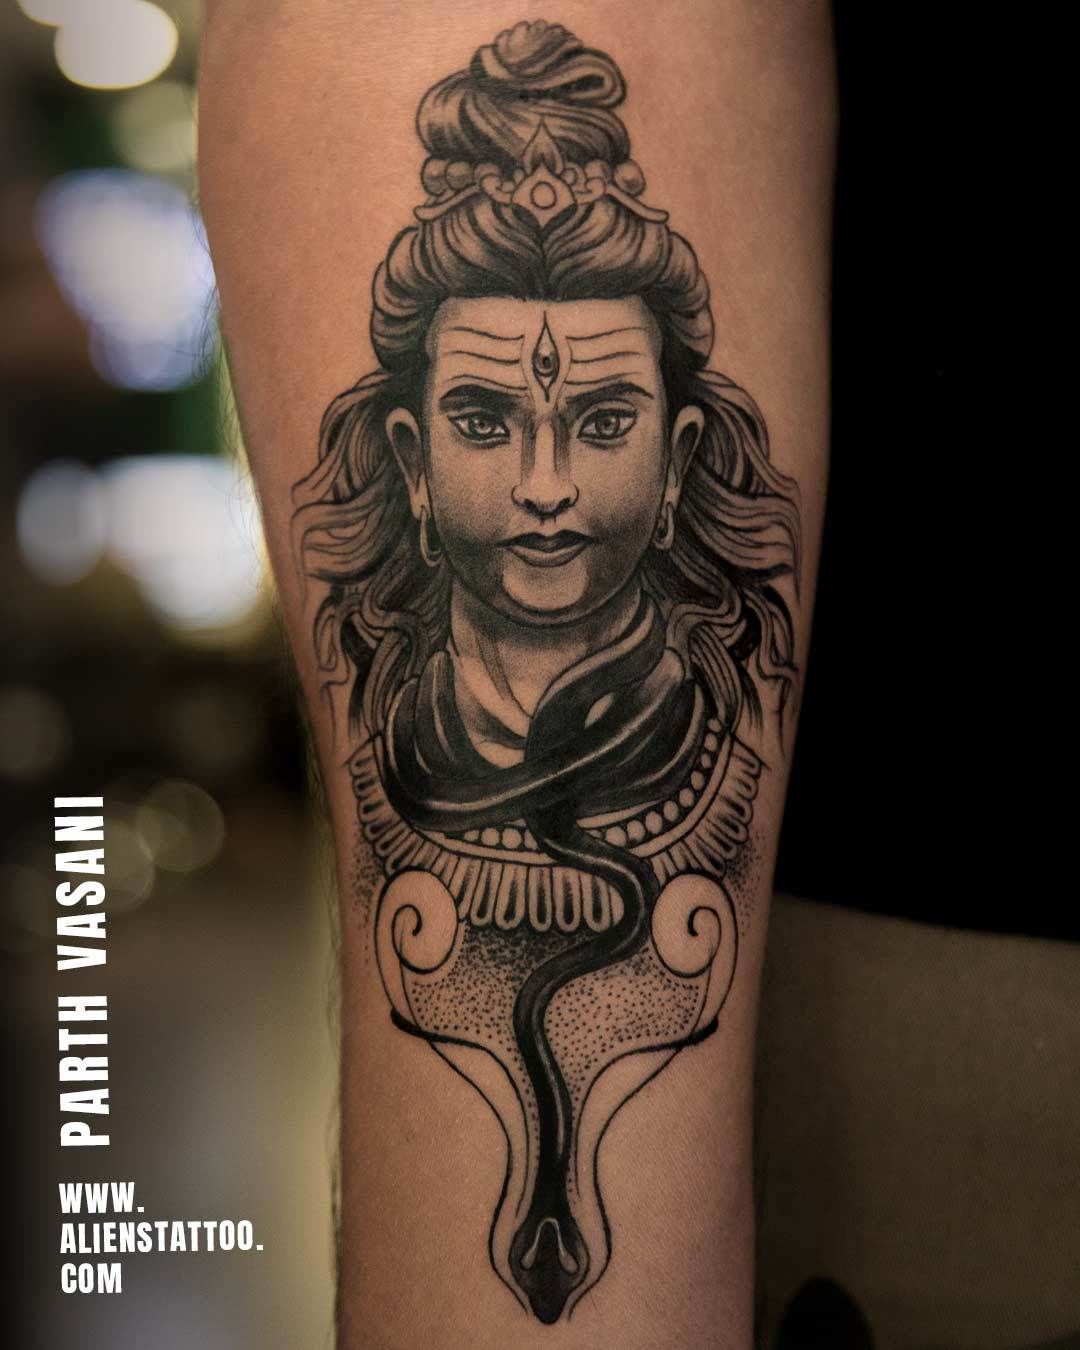 parth vasani on LinkedIn: #shiva #tattoos #tattoo #tattooartist #pinterest